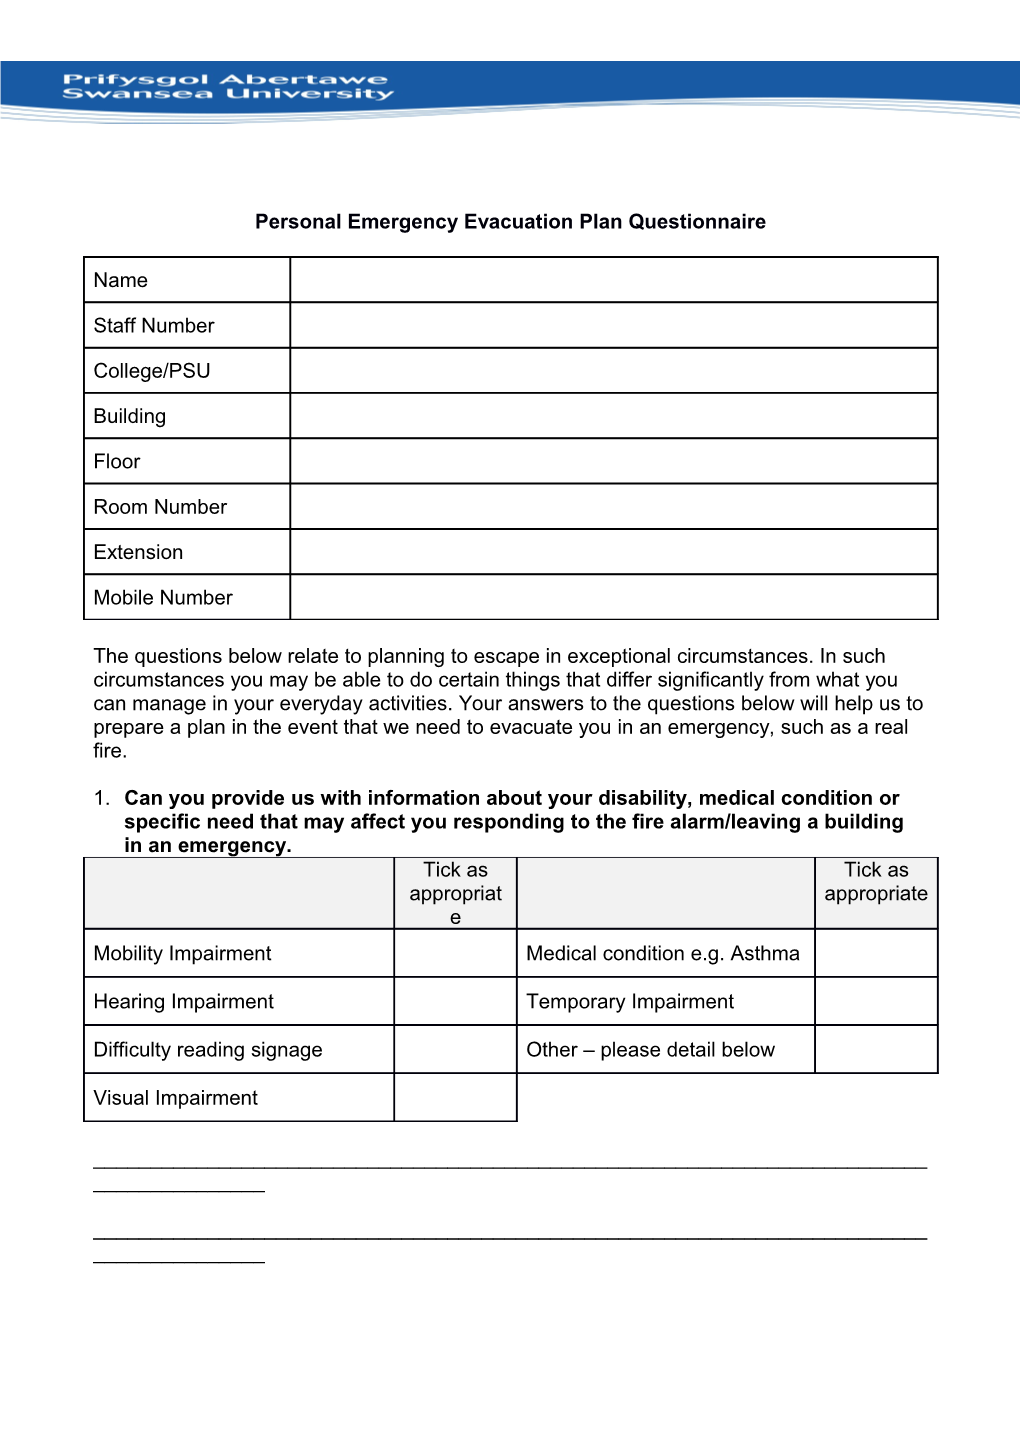 Personal Emergency Evacuation Plan Questionnaire